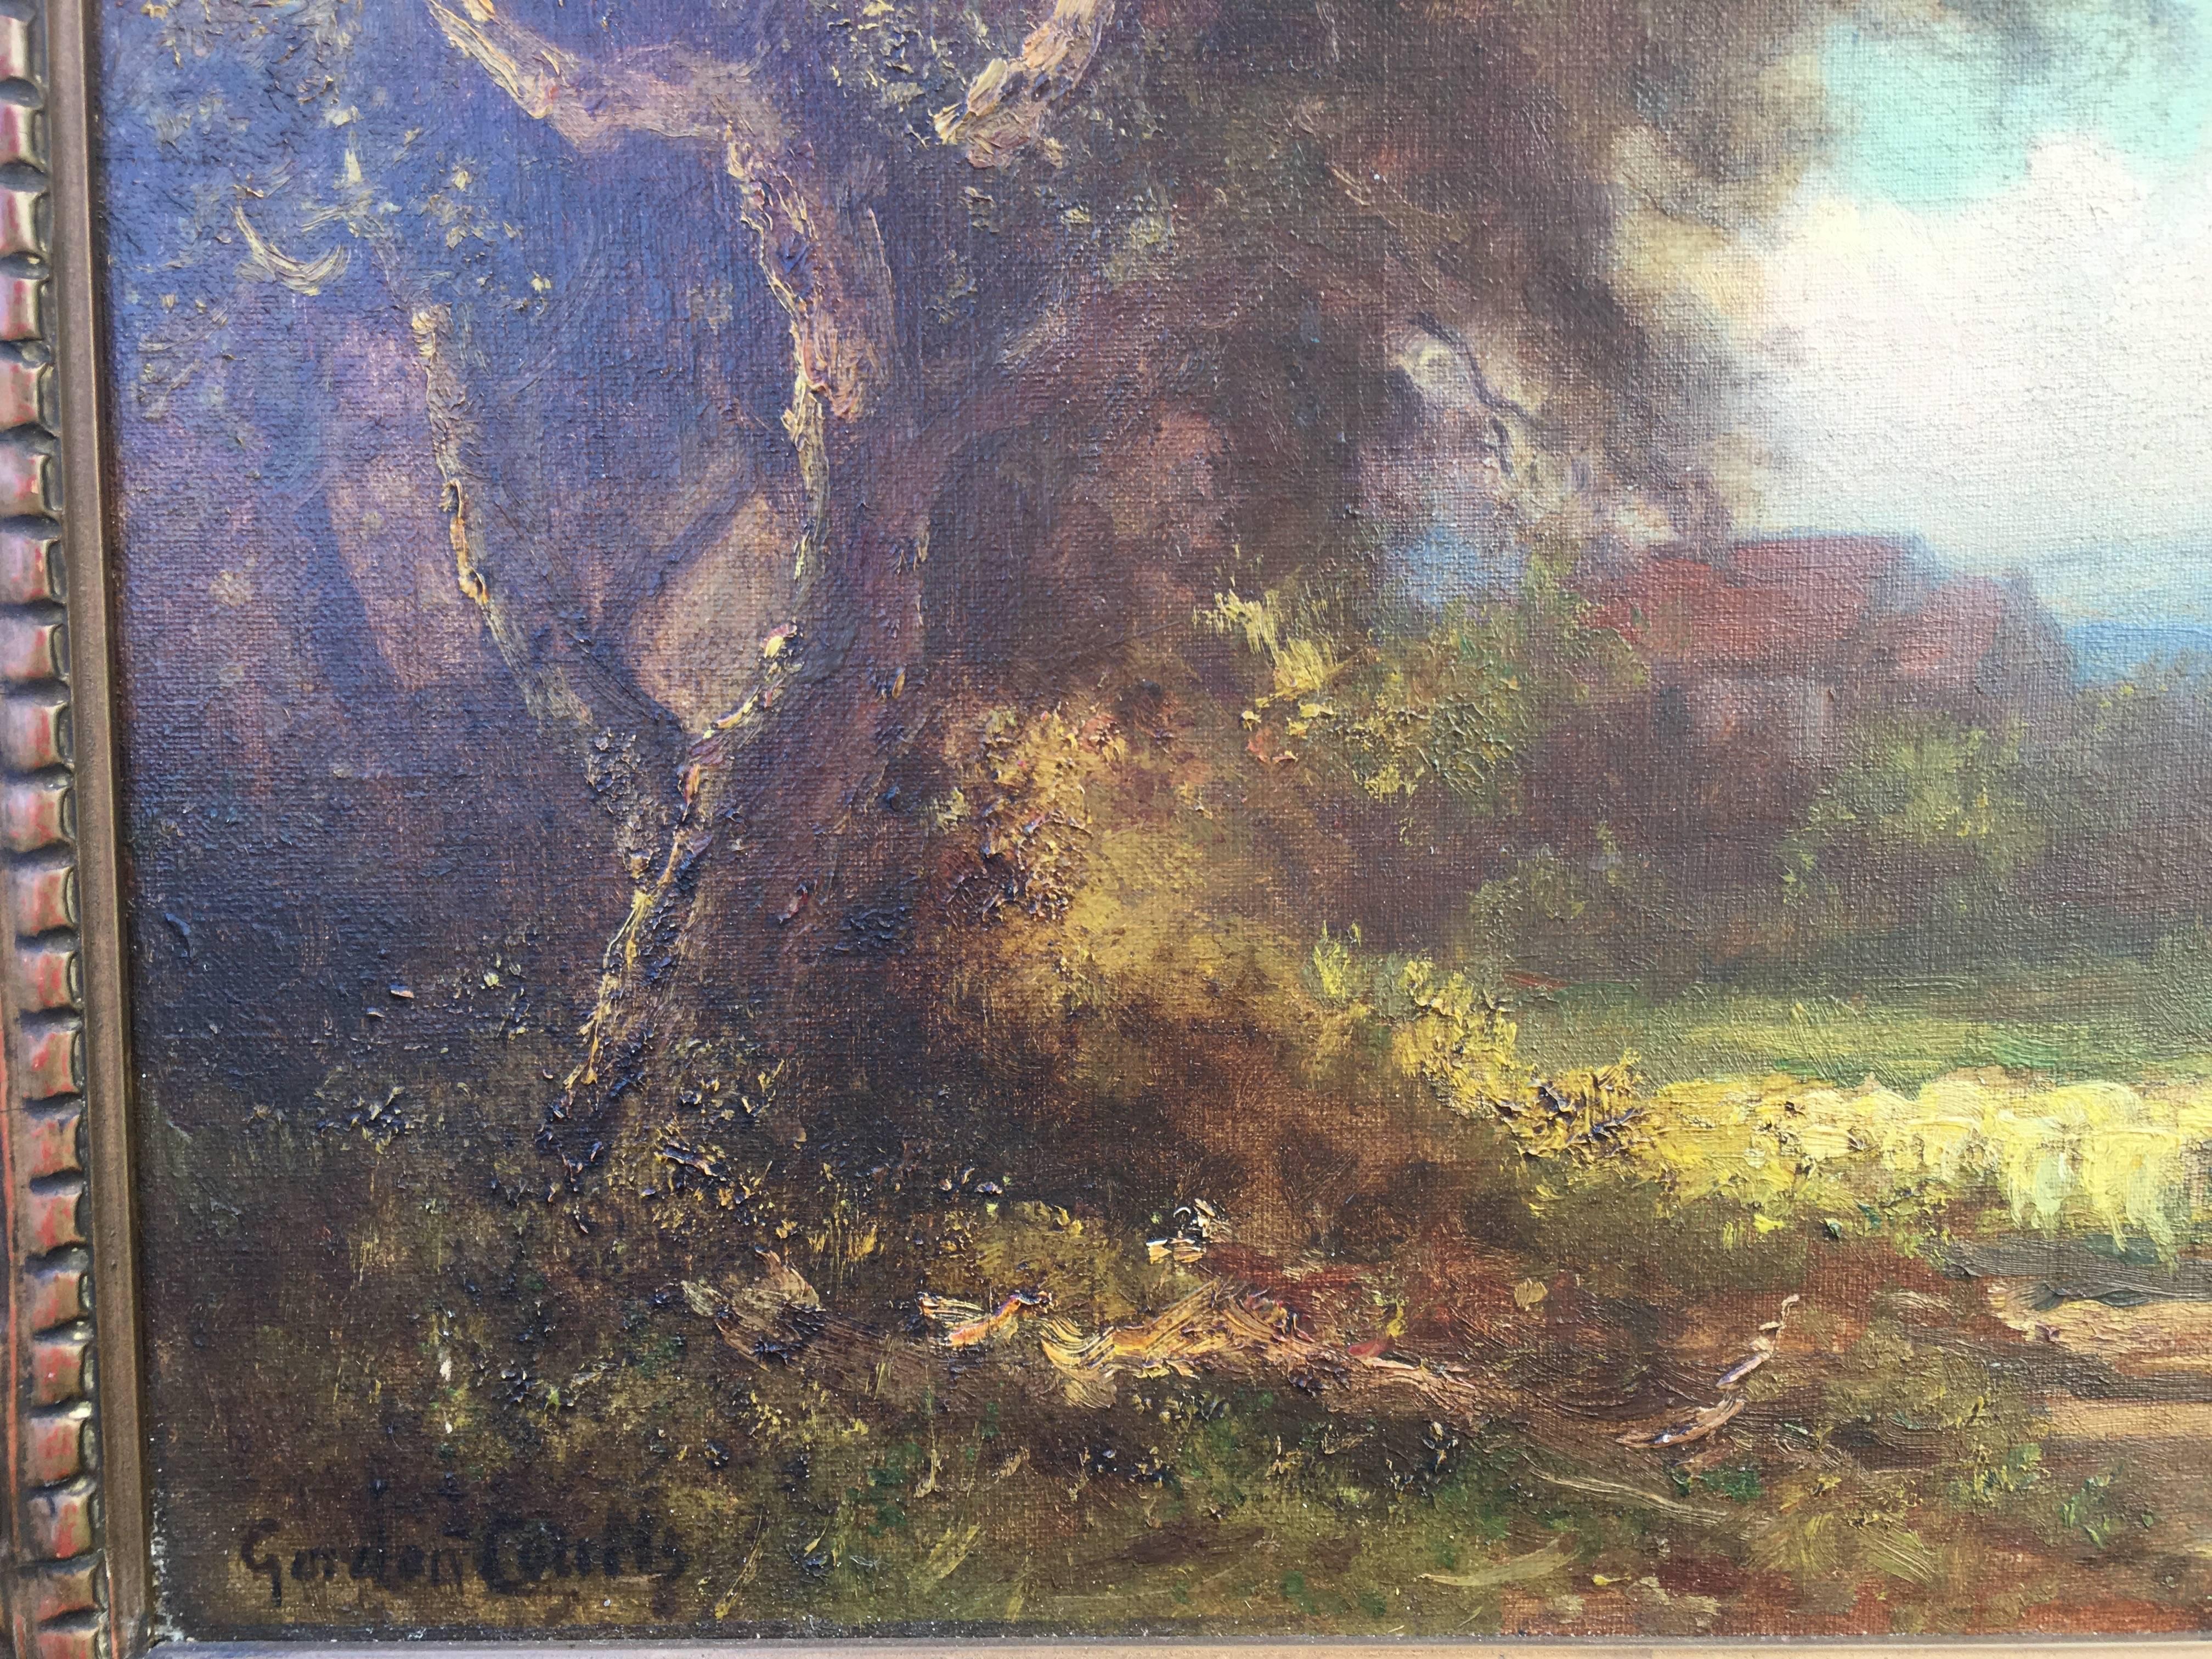 Shepherd Herding His Sheep Towards Home Through the Trees  (Grau), Landscape Painting, von Gordon Coutts